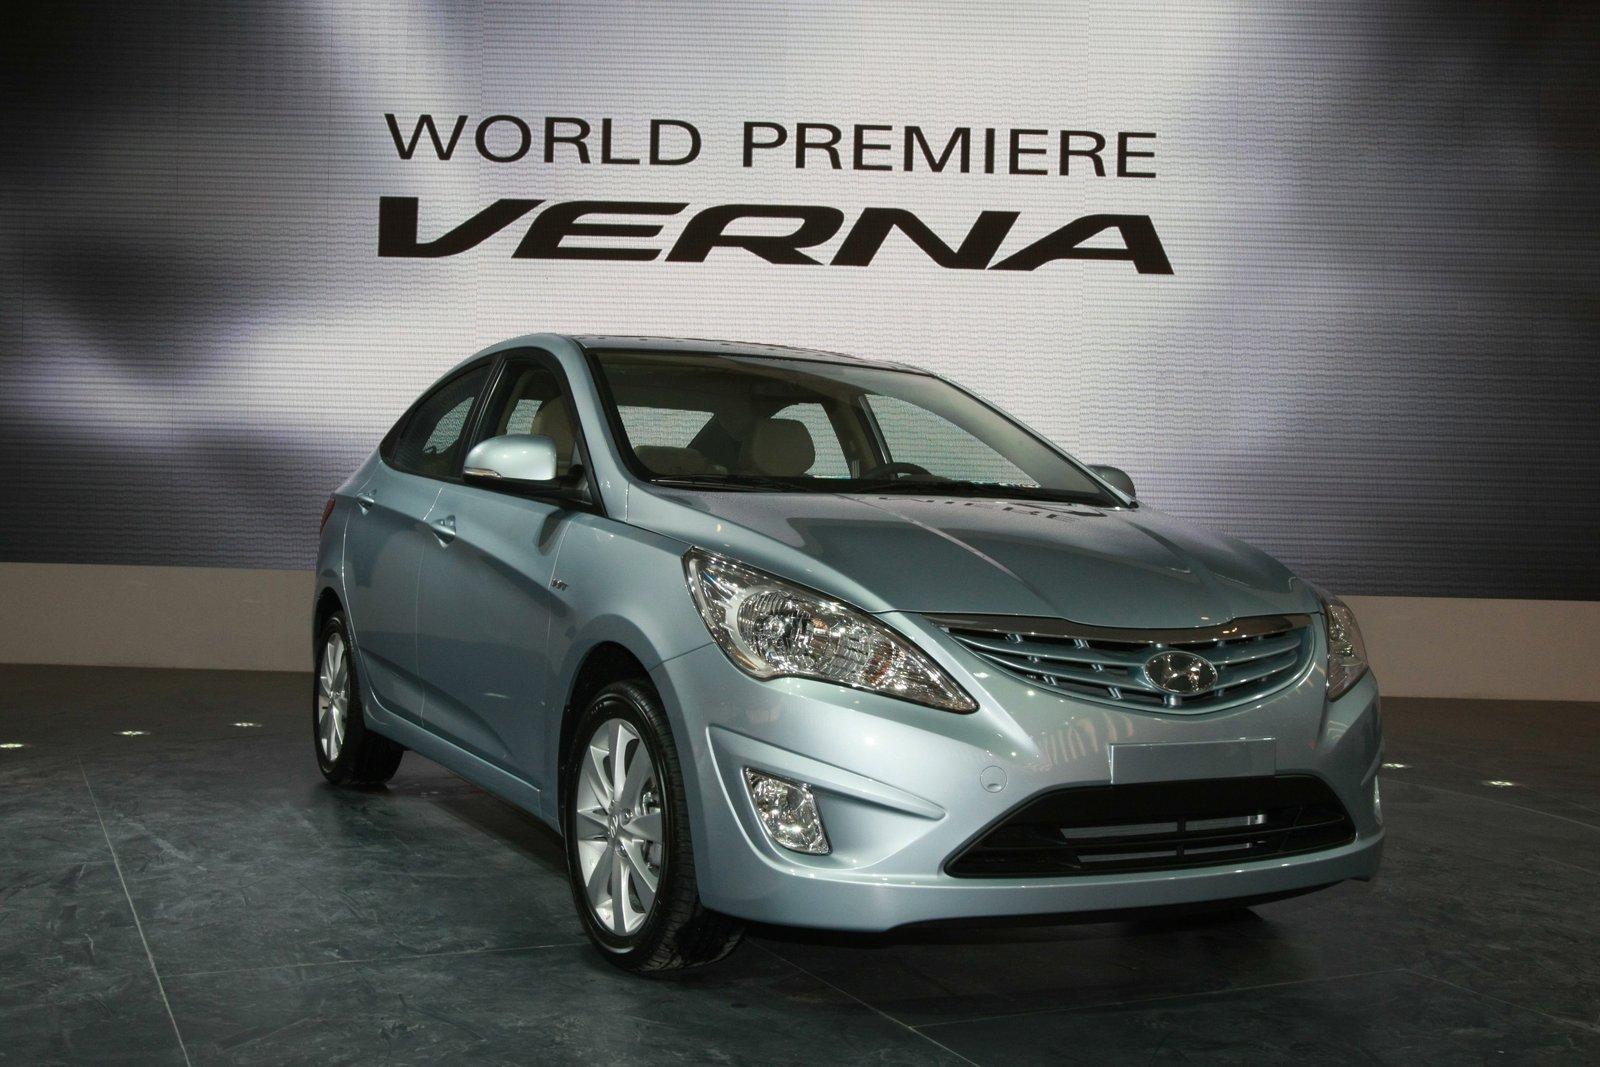 Car Wallpapers Gallery: 2011 Hyundai Verna